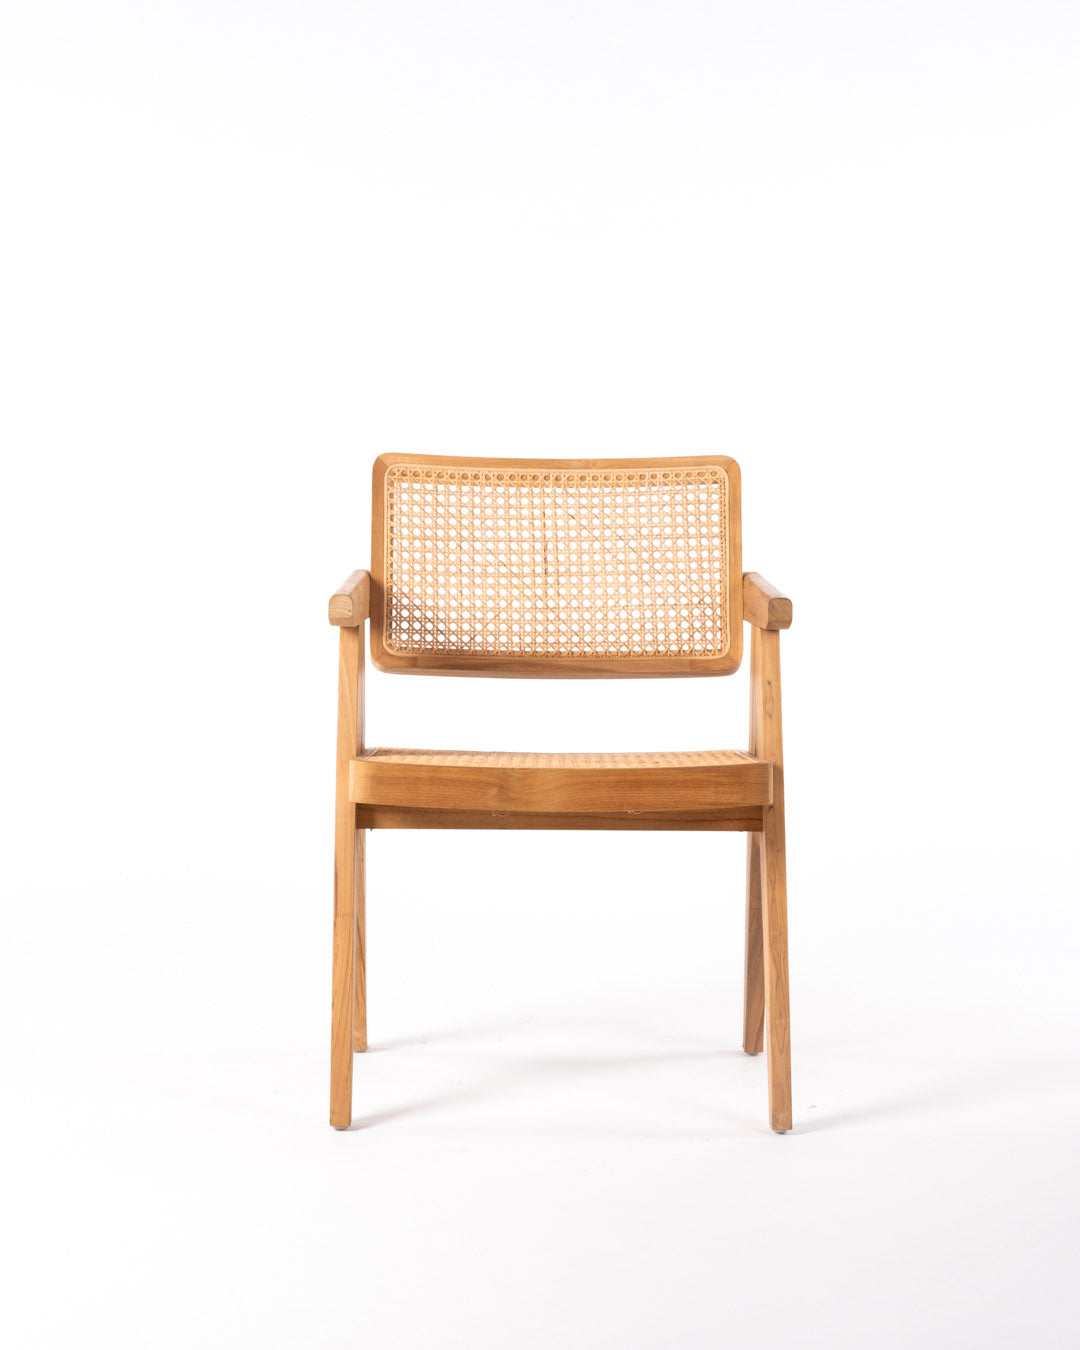 sillón individual madera maciza natural  teca y ratán natural trenzado Bacan con apoya brazos, hecho a mano con acabado natural, fabricado en Indonesia